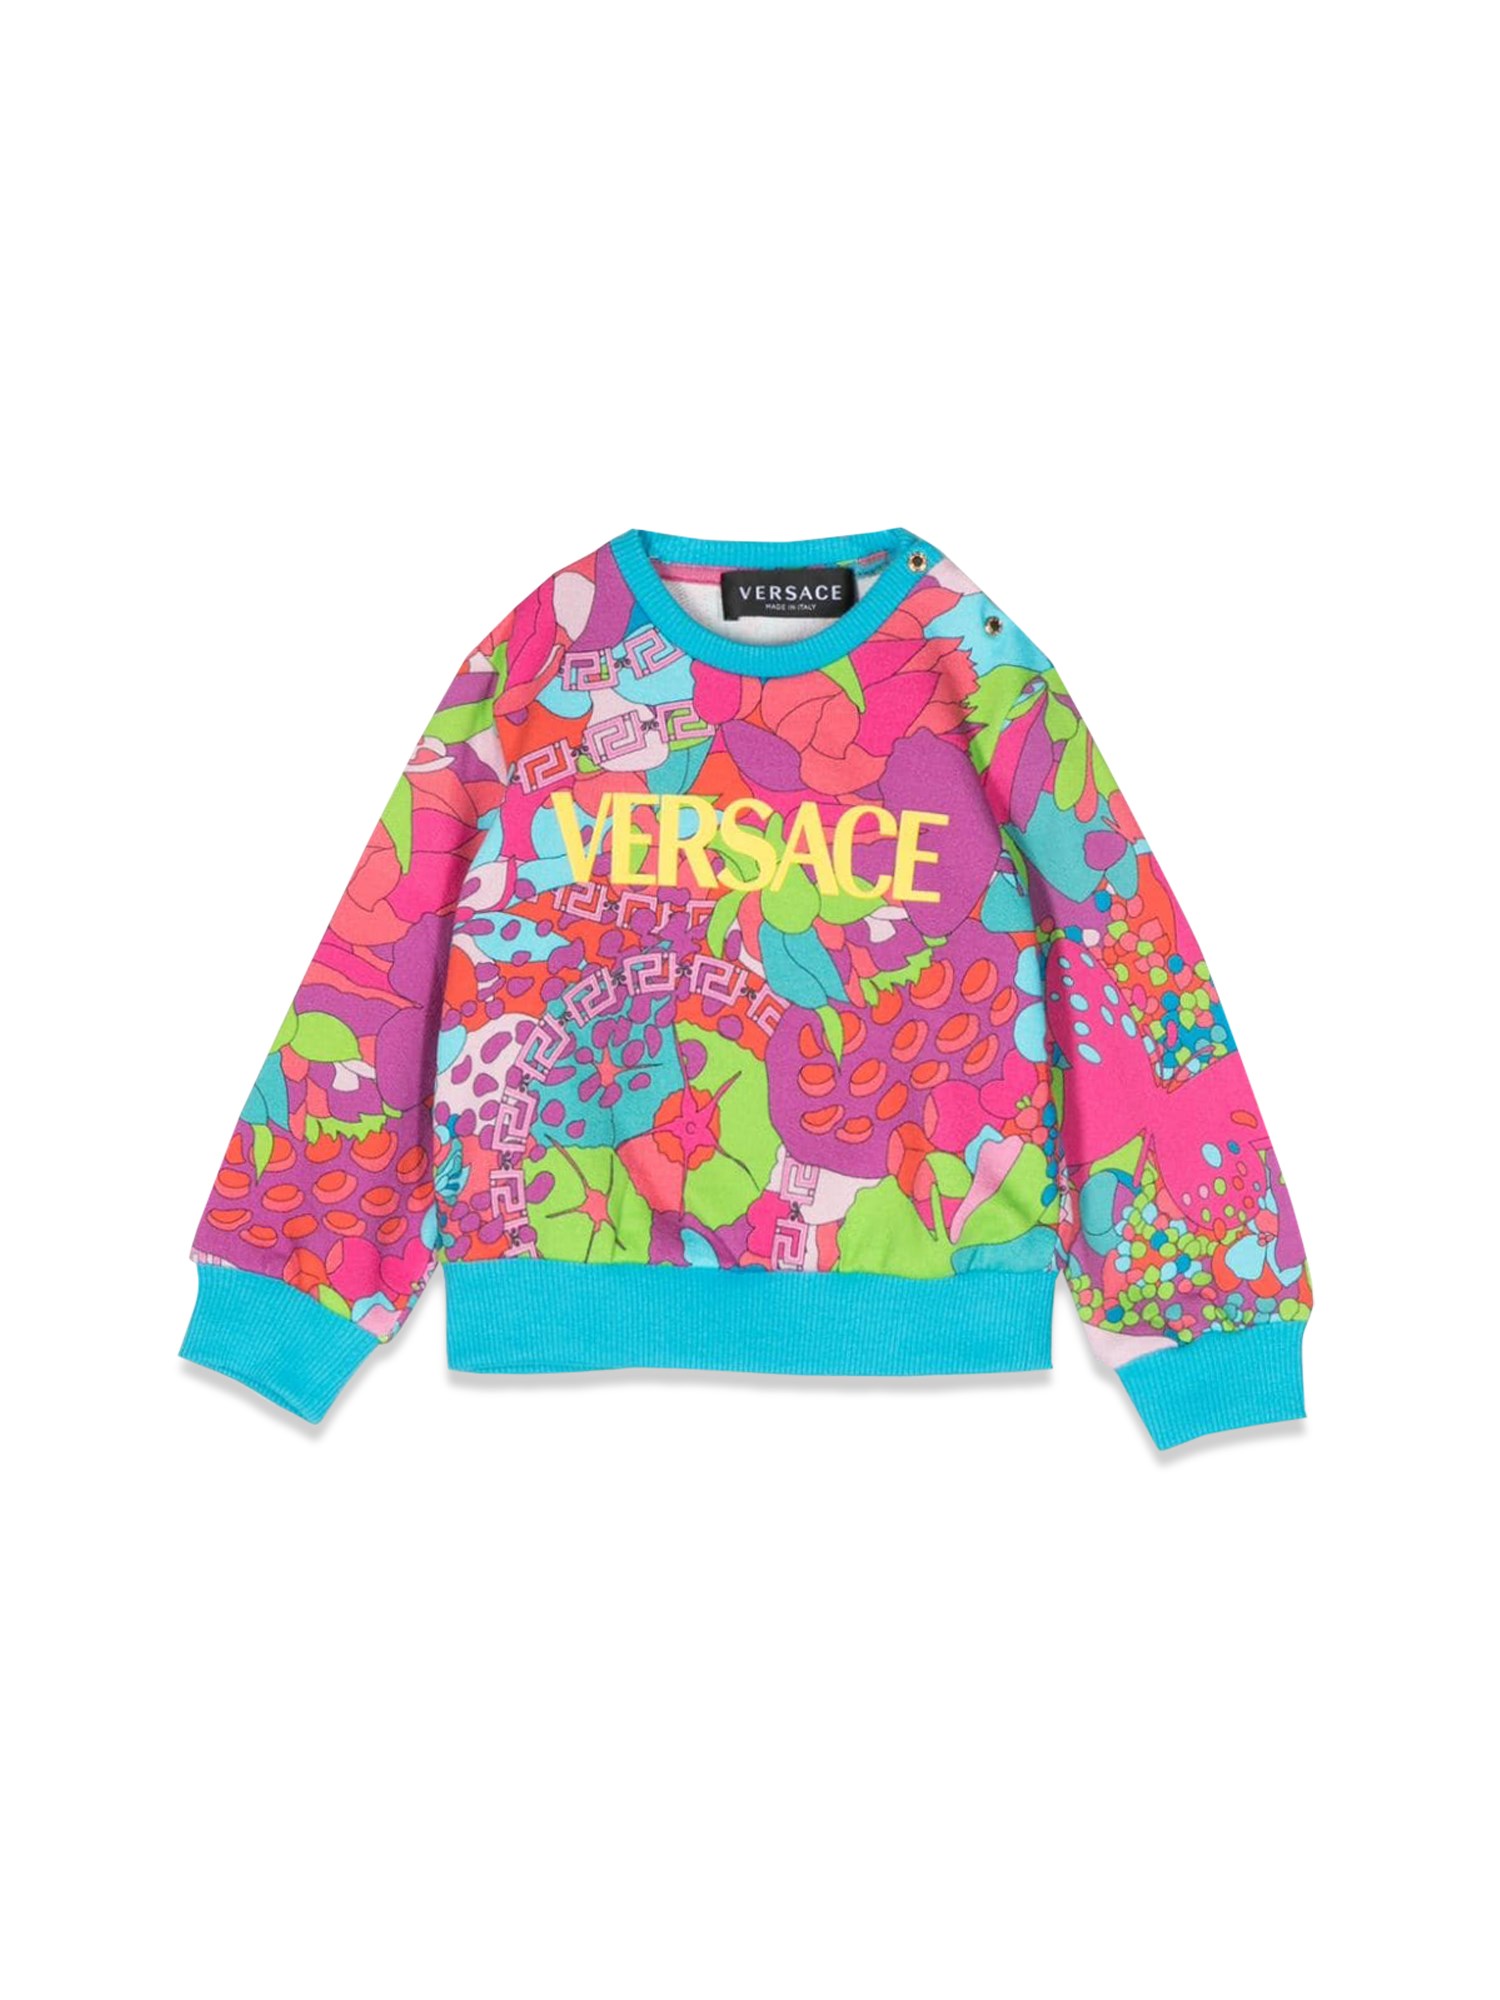 Versace versace floral crewneck sweatshirt